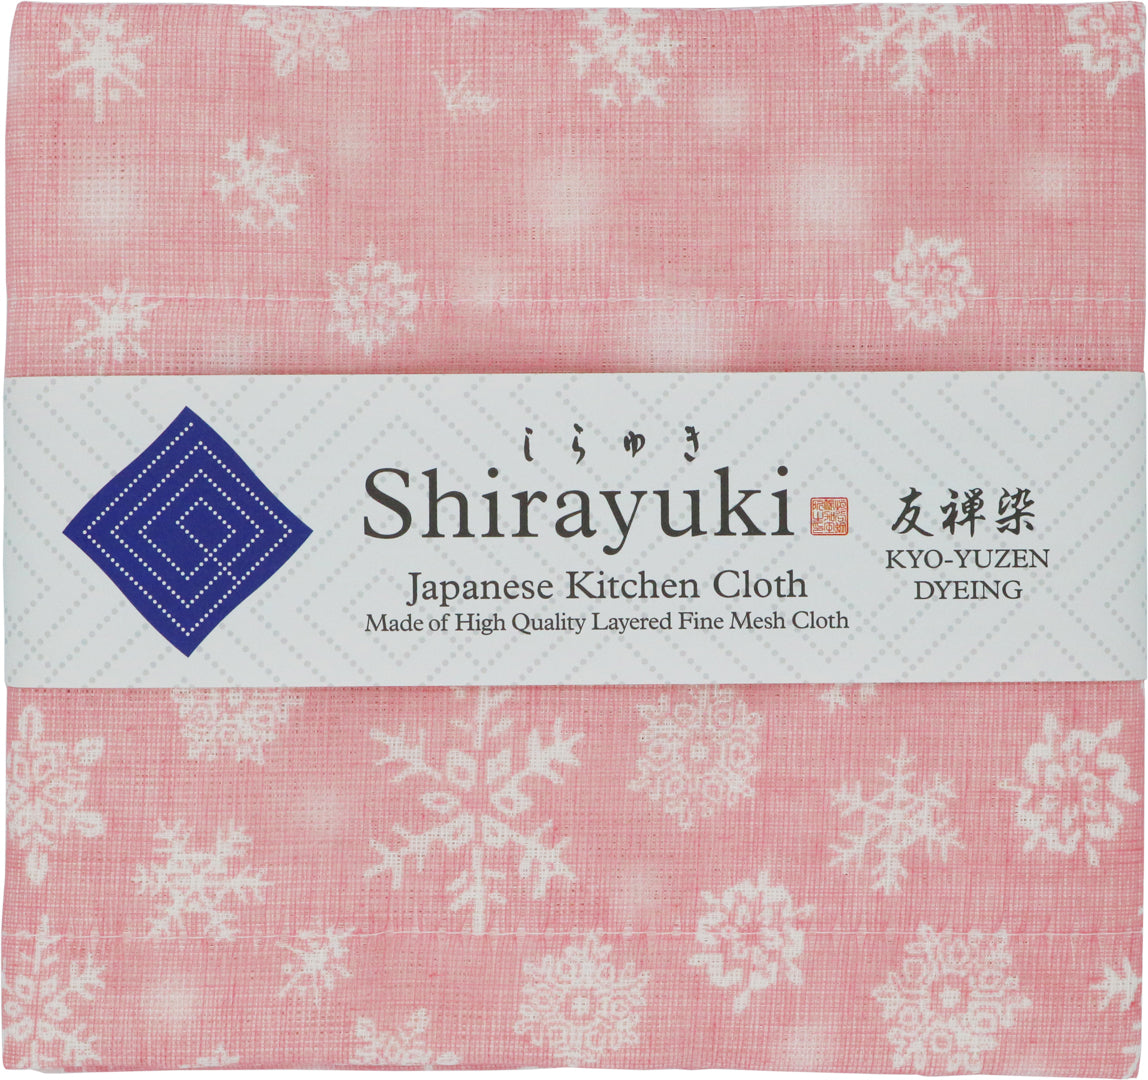 Shirayuki Kitchen Cloth - 100% Natural Handmade Mesh Cloth Made in Japan - Reusable & Biodegradable (Pink, Snow Queen)